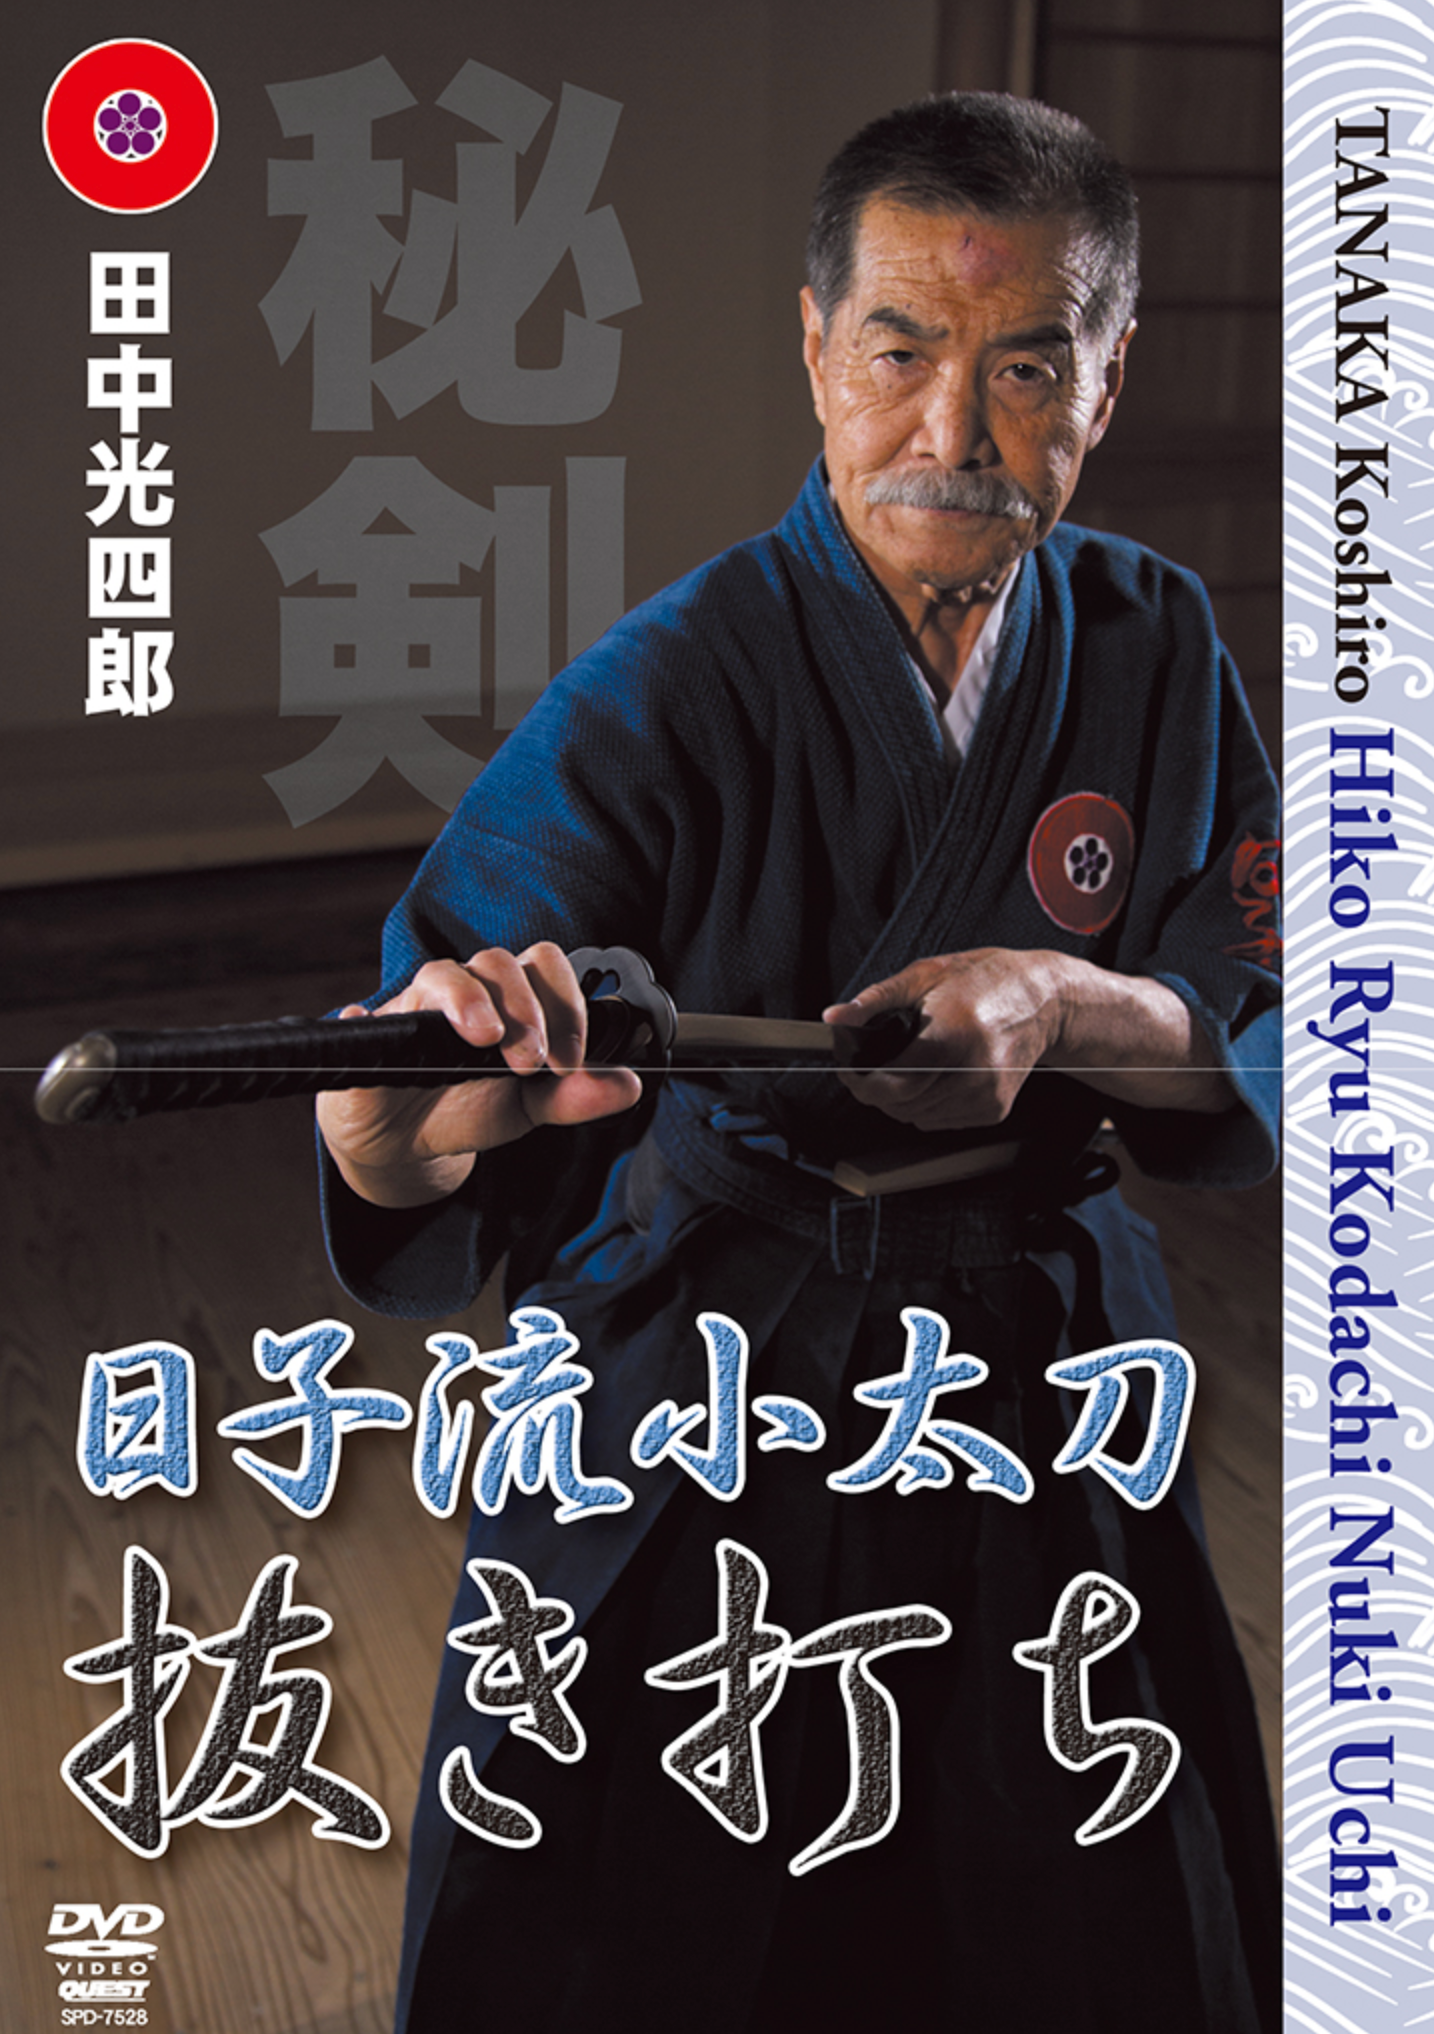 Hiko Ryu Kodachi Nuki Uchi DVD with Koshiro Tanaka - Budovideos Inc